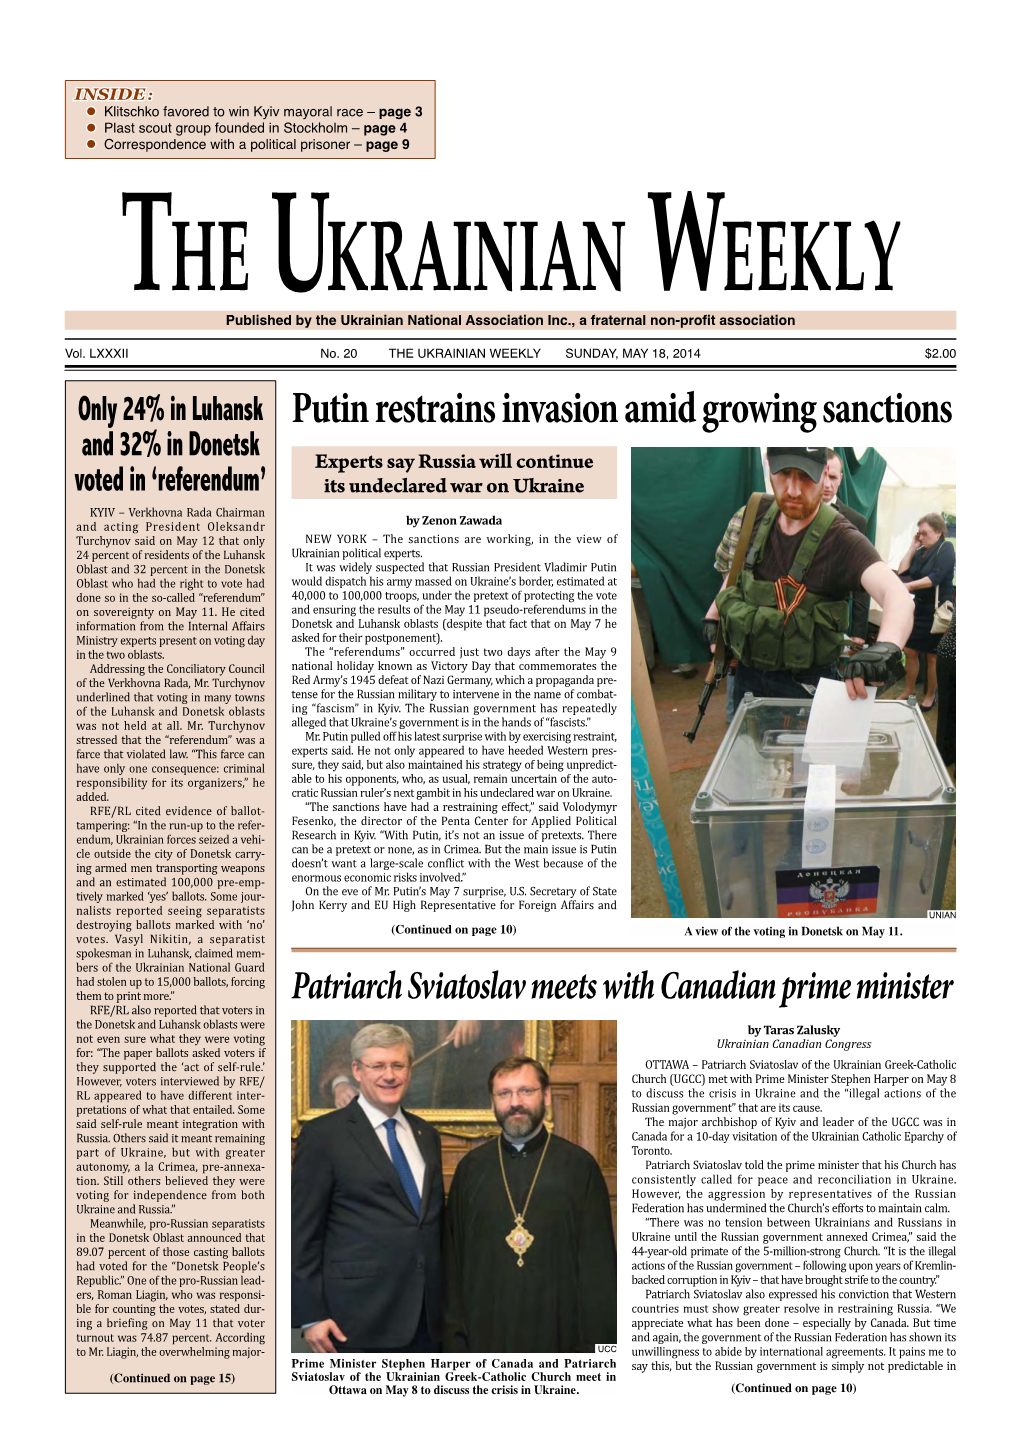 The Ukrainian Weekly 2014, No.20